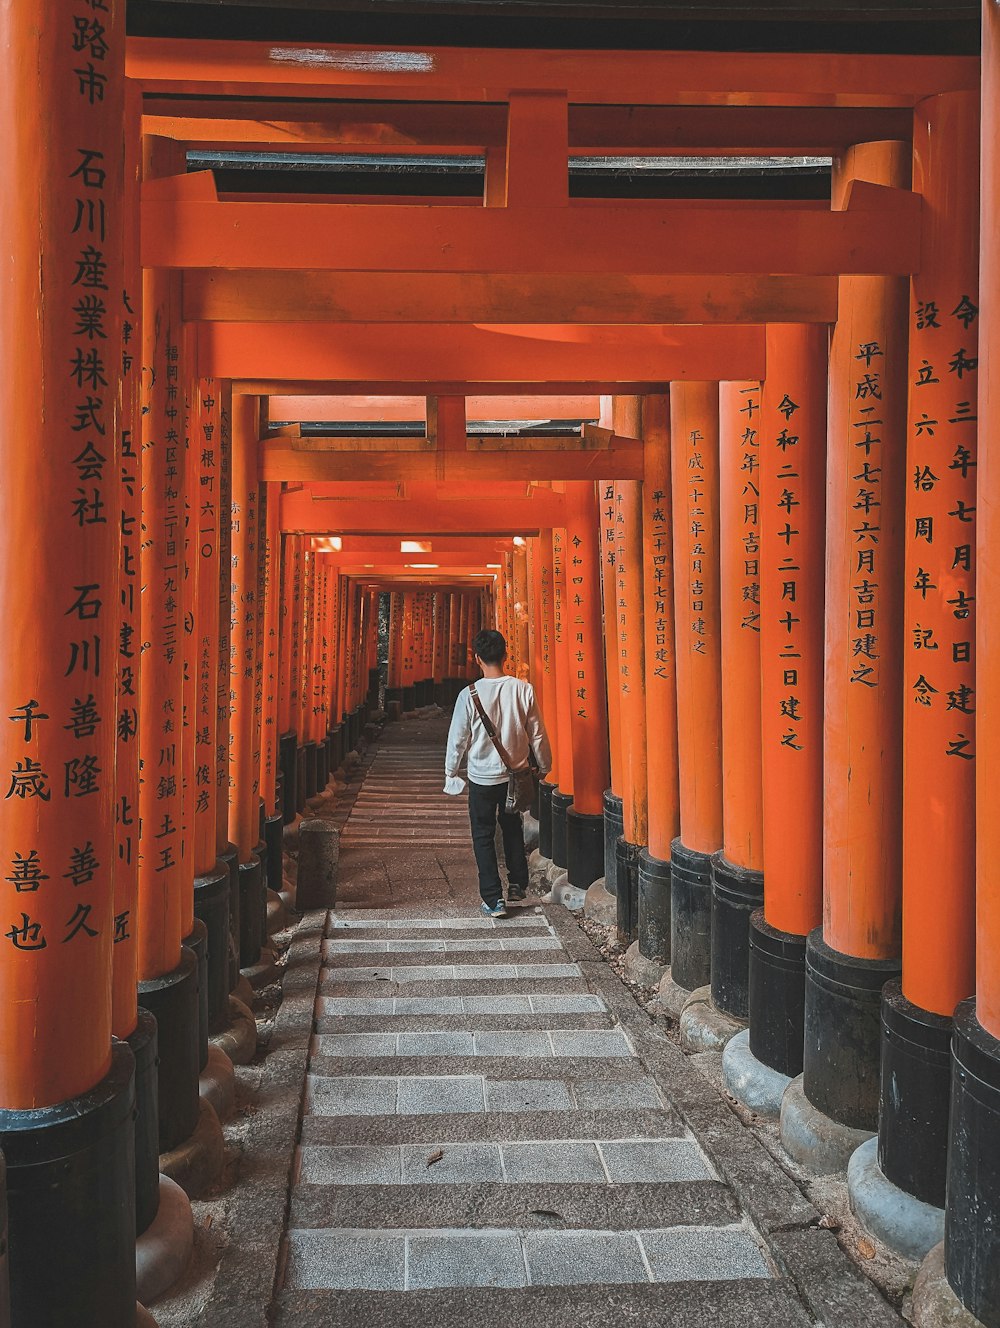 Un hombre caminando por una larga pasarela bordeada de pilares naranjas